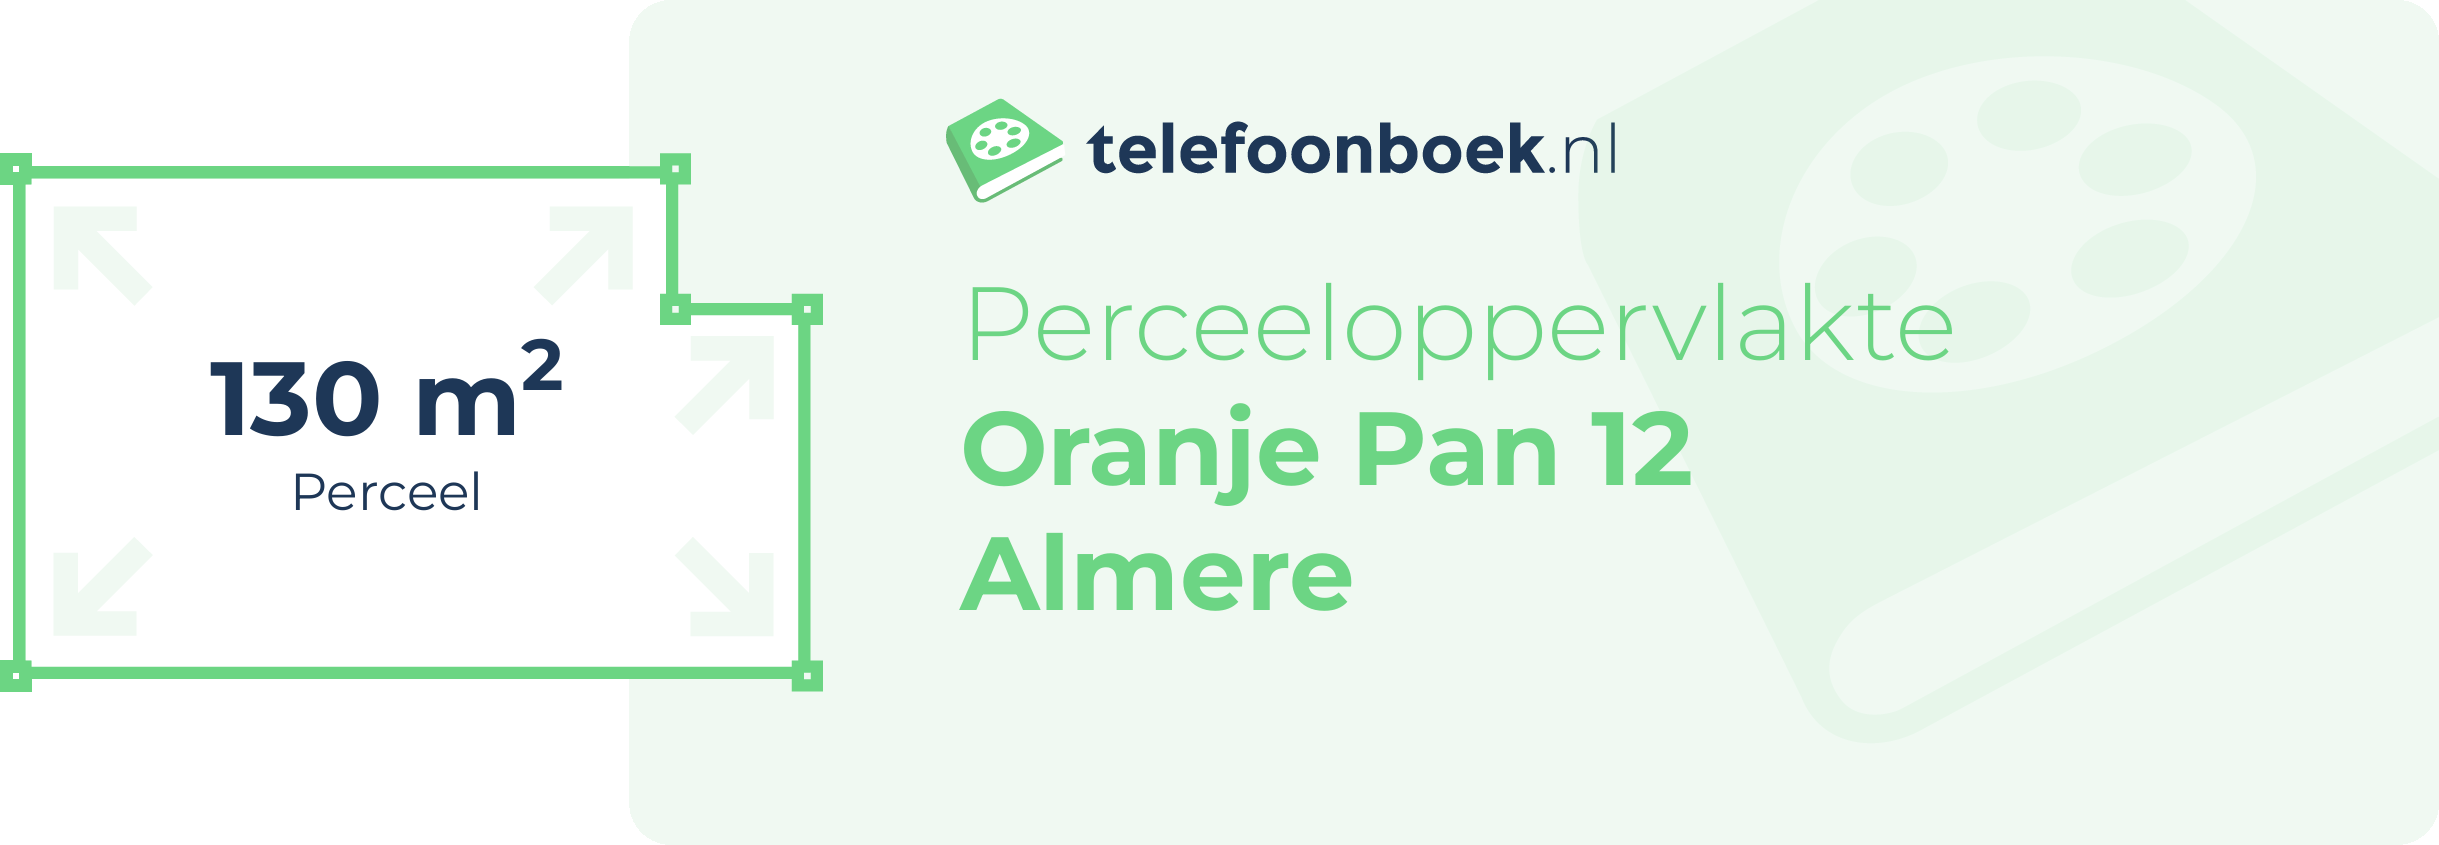 Perceeloppervlakte Oranje Pan 12 Almere